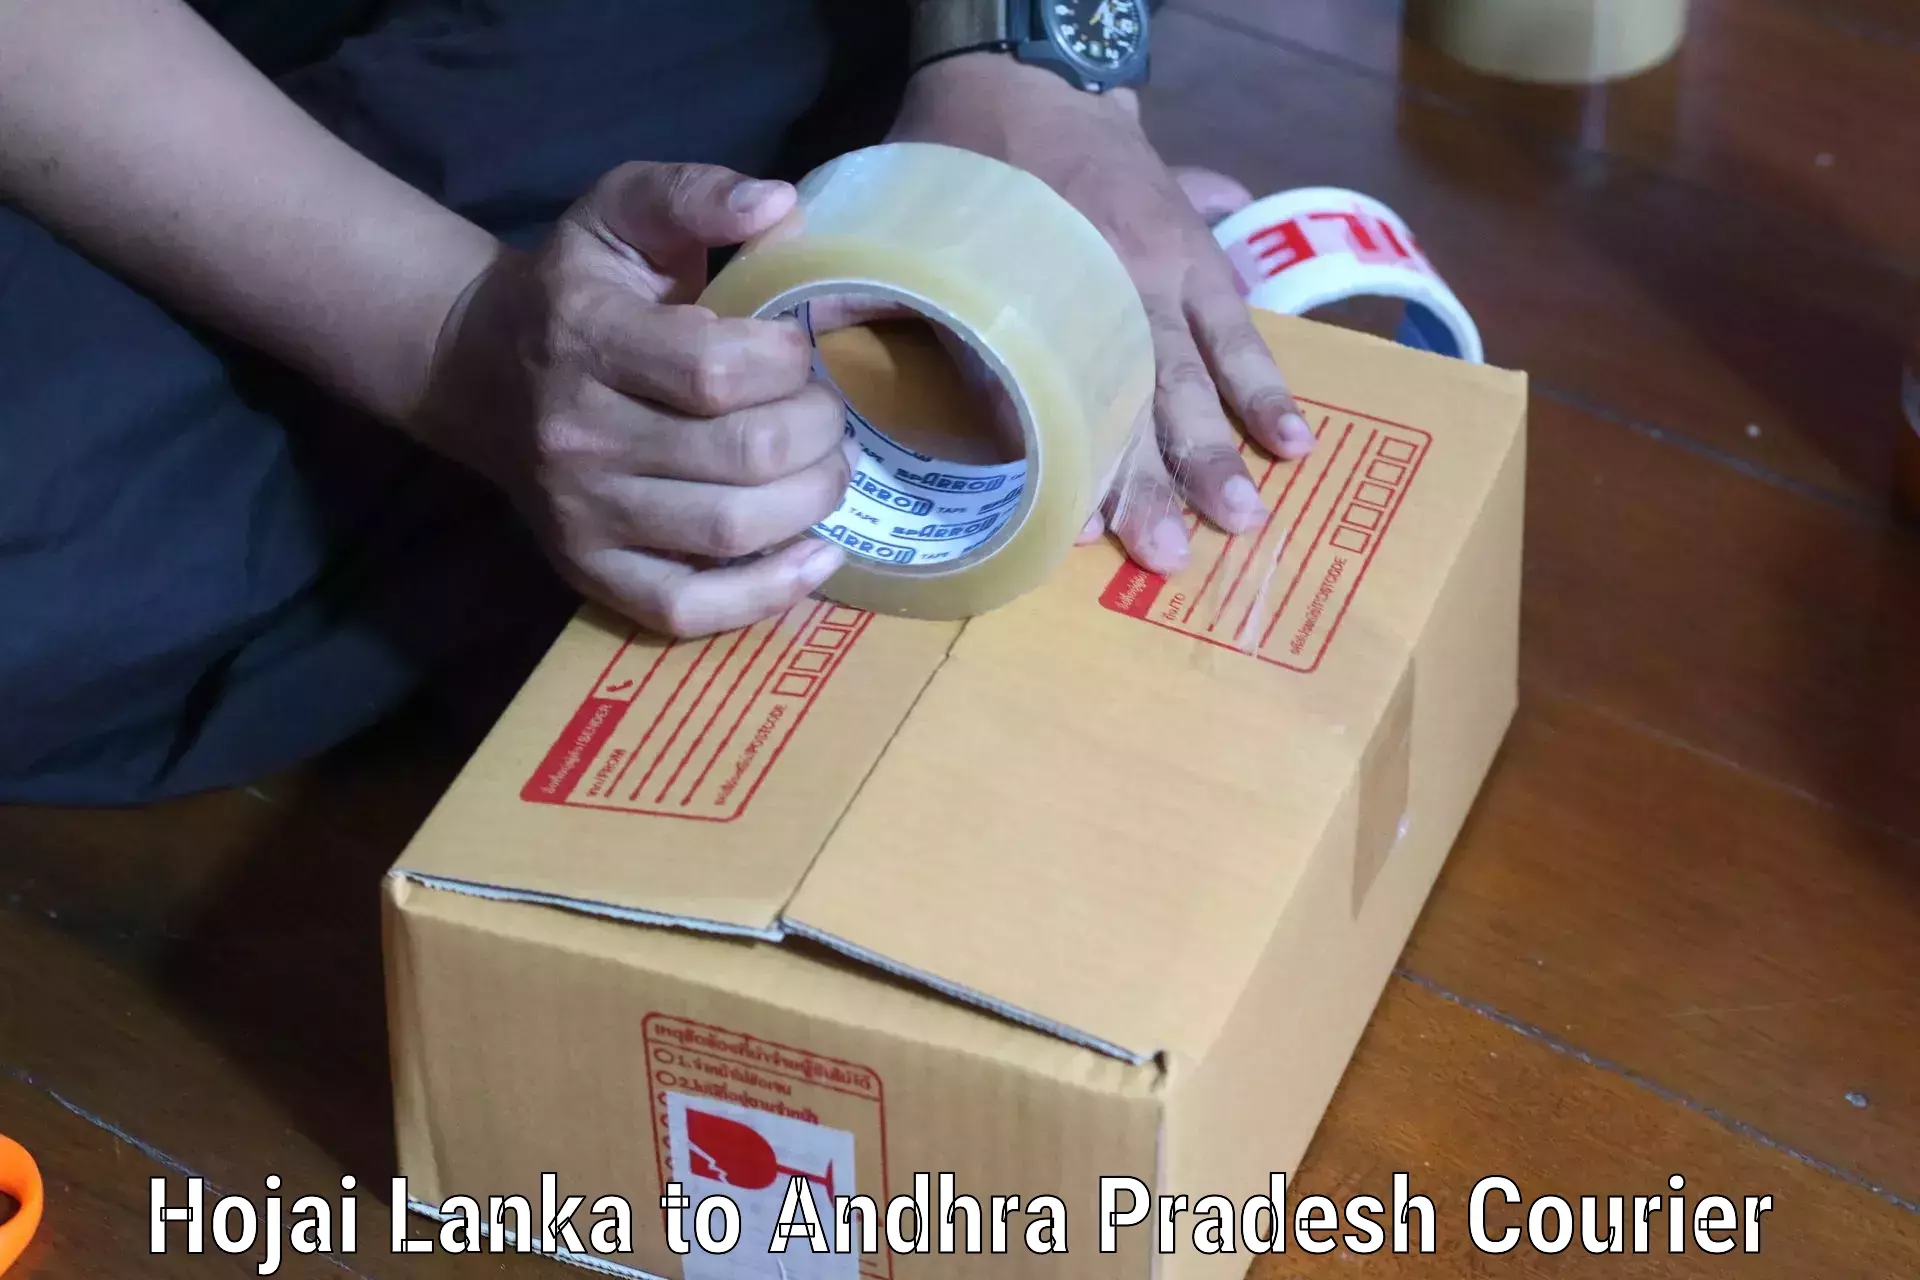 Courier service booking Hojai Lanka to Naidupeta